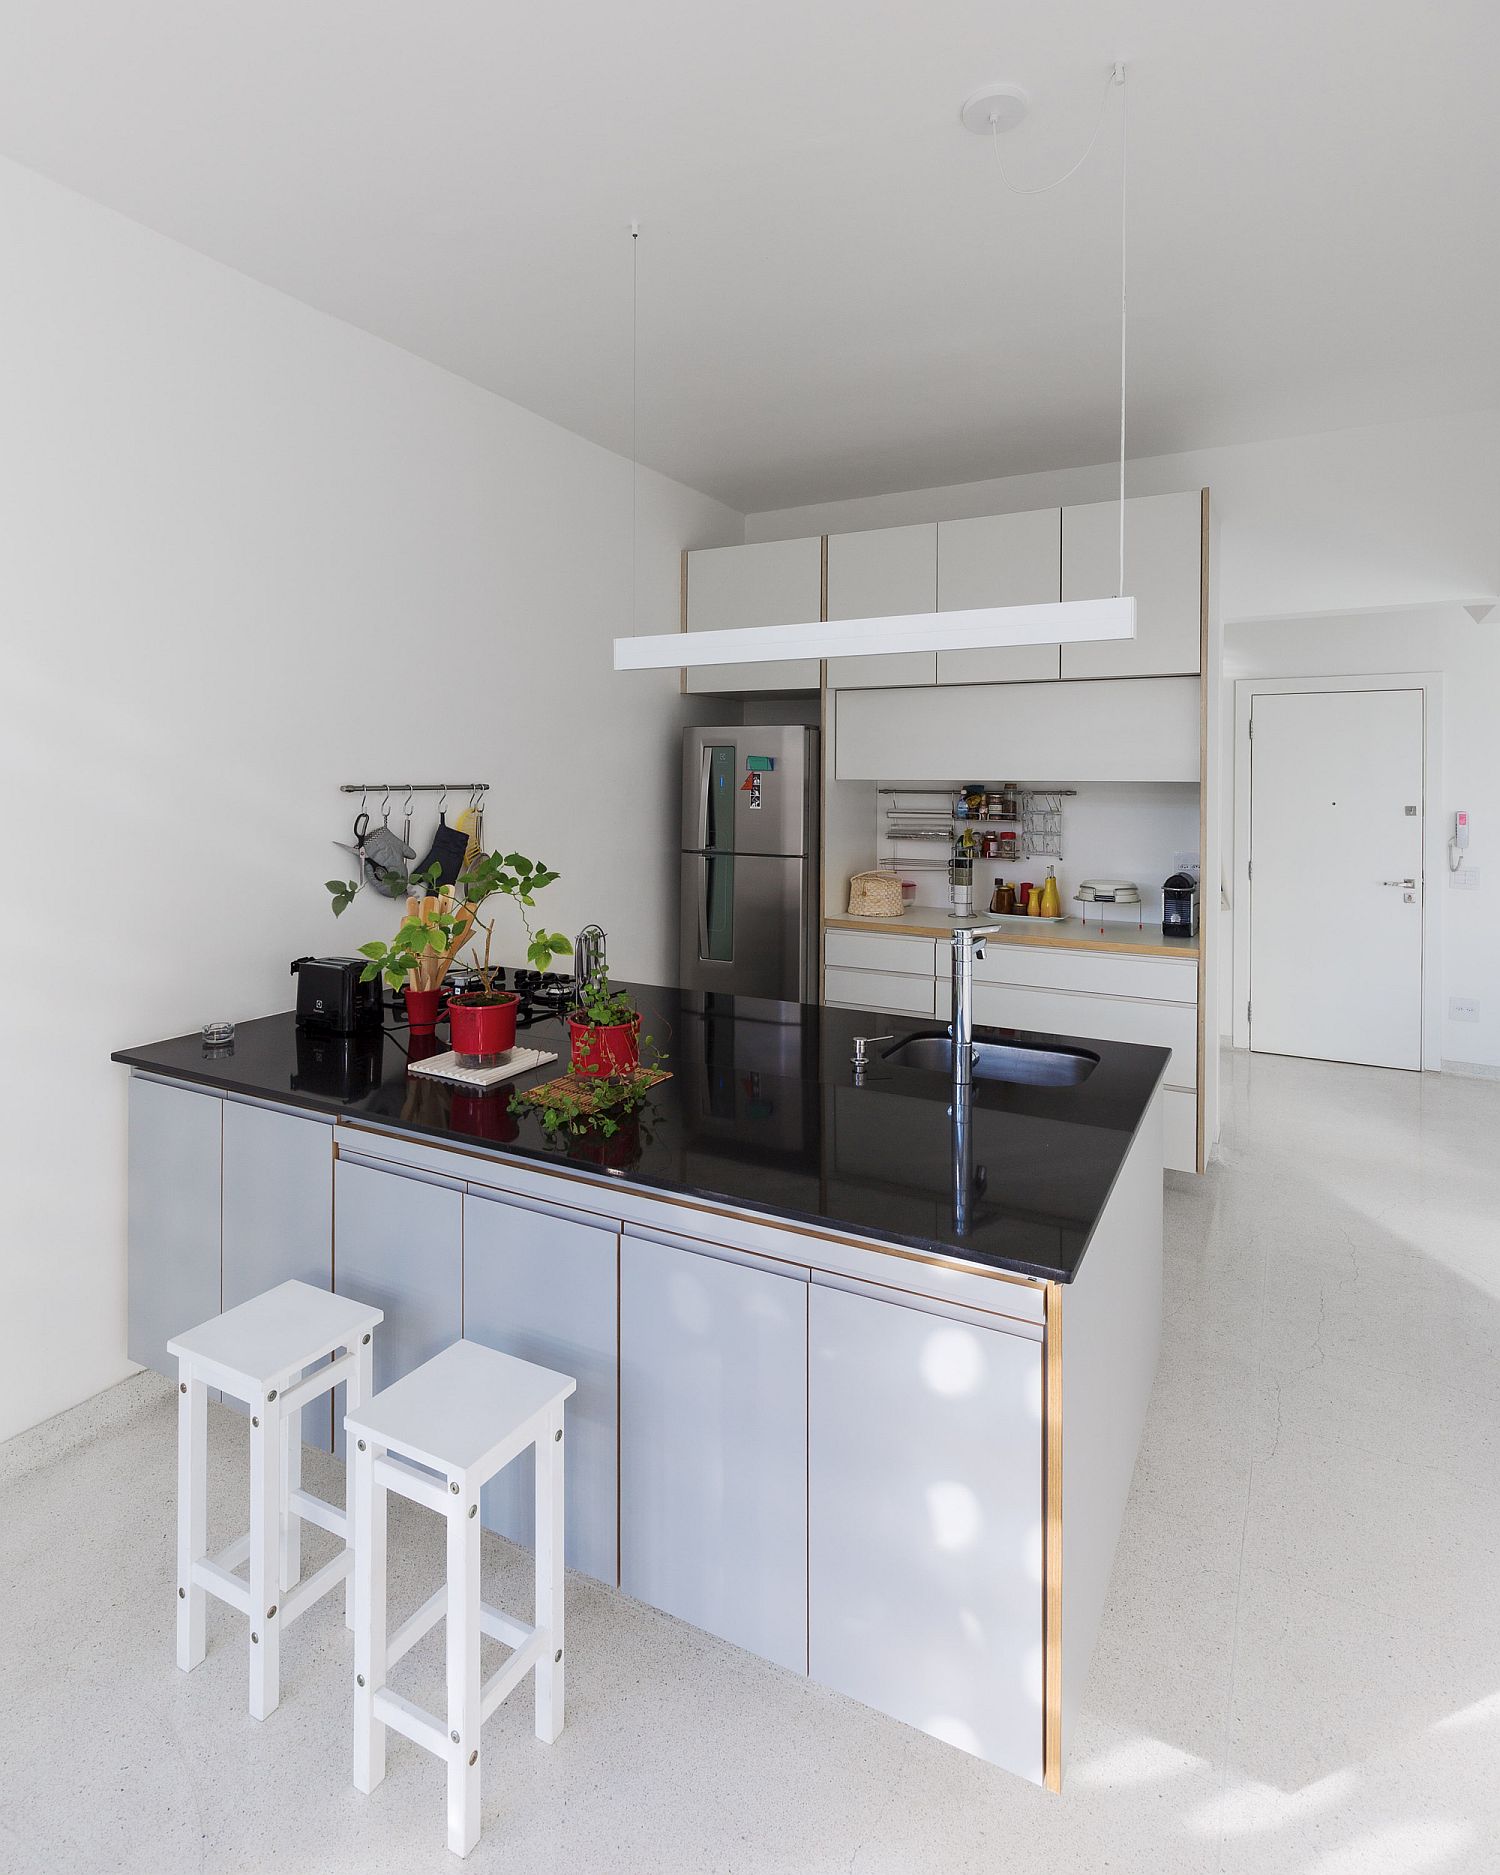 Kitchen-in-white-with-a-dark-island-countertop